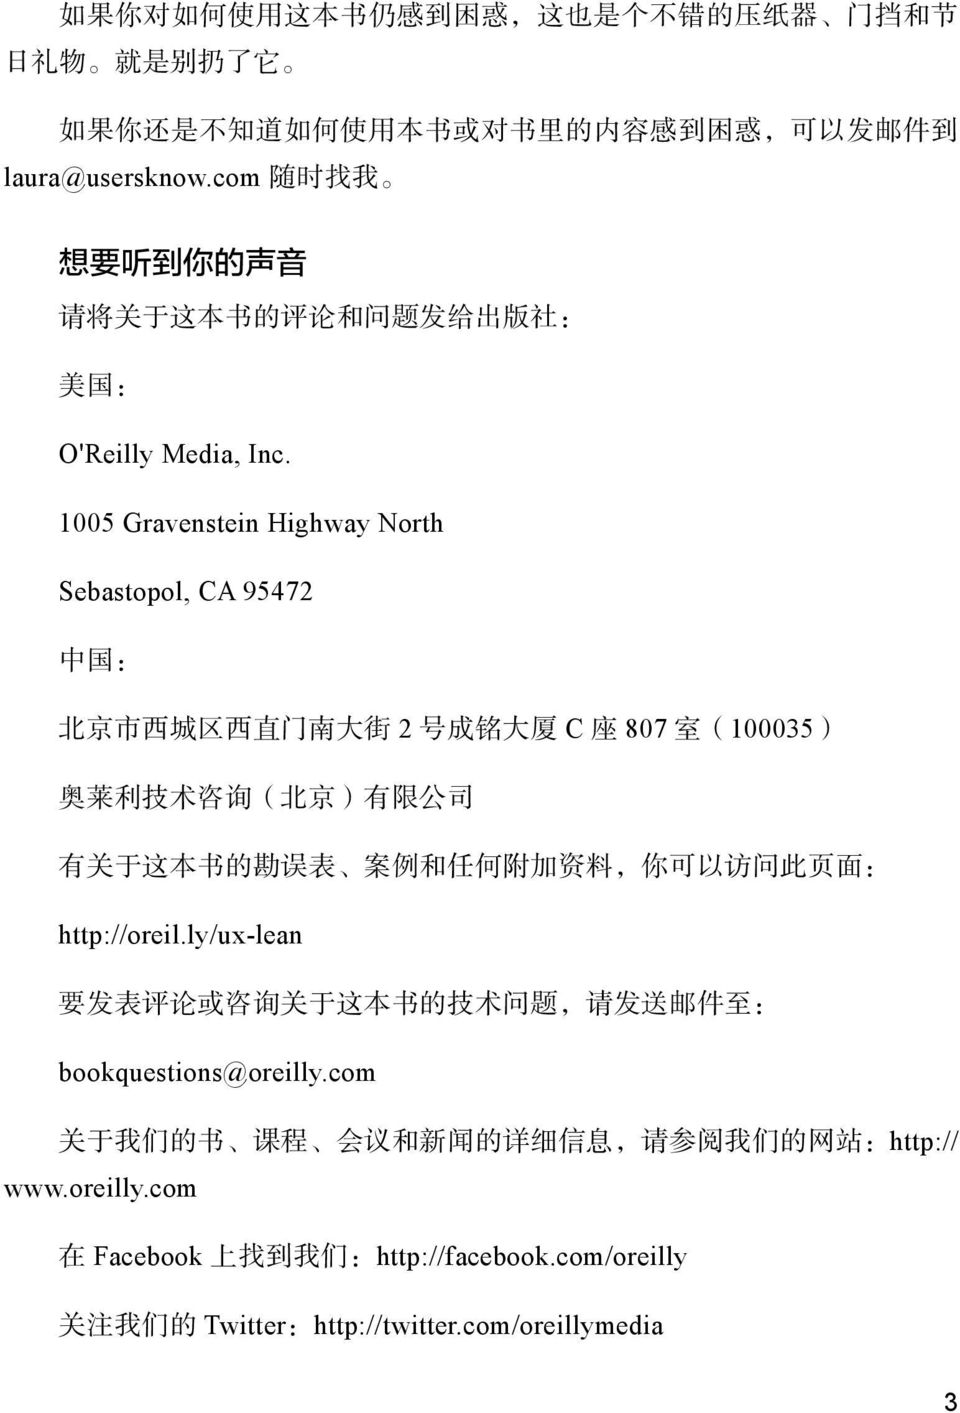 1005 Gravenstein Highway North Sebastopol, CA 95472 中 国 : 北 京 市 西 城 区 西 直 门 南 大 街 2 号 成 铭 大 厦 C 座 807 室 (100035) 奥 莱 利 技 术 咨 询 ( 北 京 ) 有 限 公 司 有 关 于 这 本 书 的 勘 误 表 案 例 和 任 何 附 加 资 料,